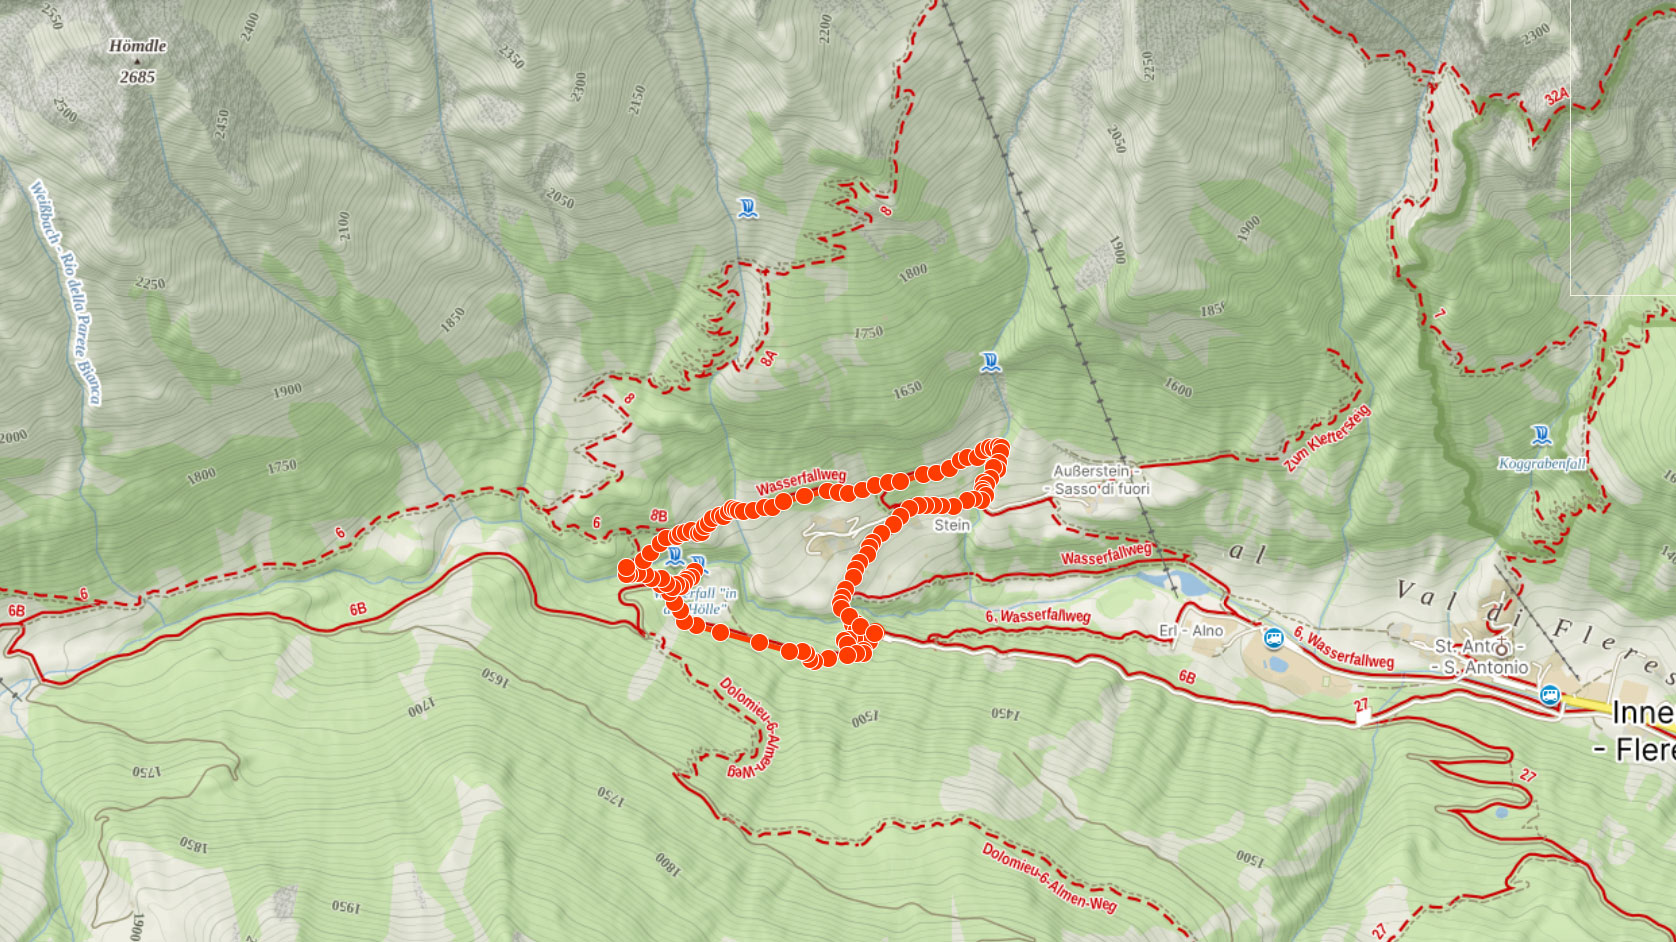 Mapa výletu k vodopádům v údolí Fleres v Itálii